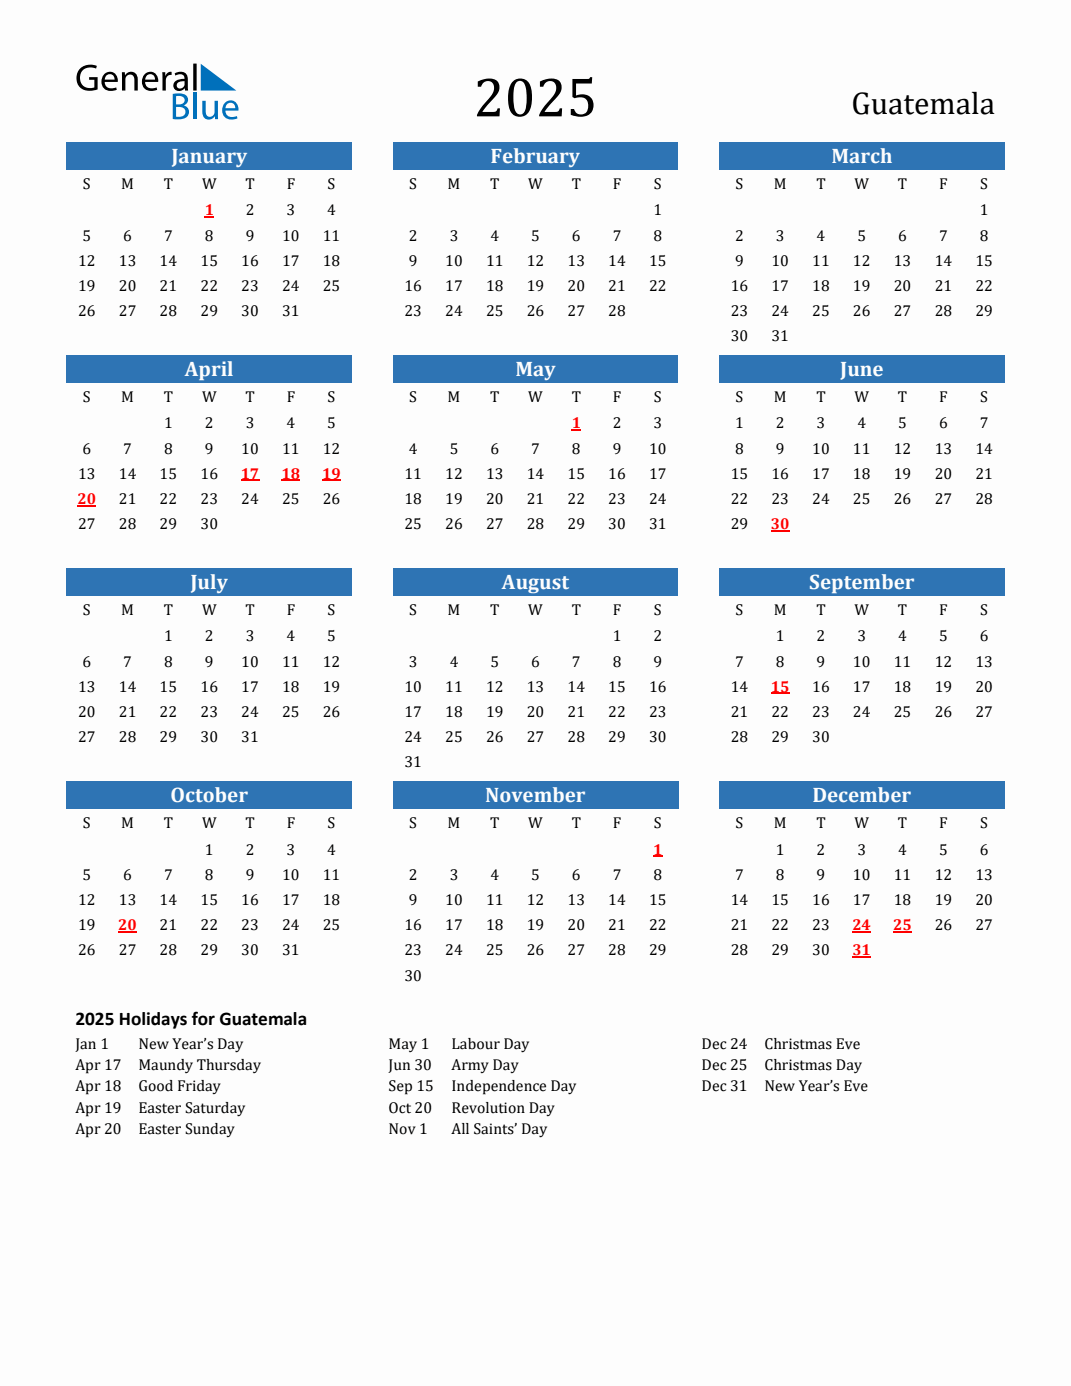 United States 2025 Holiday Calendar